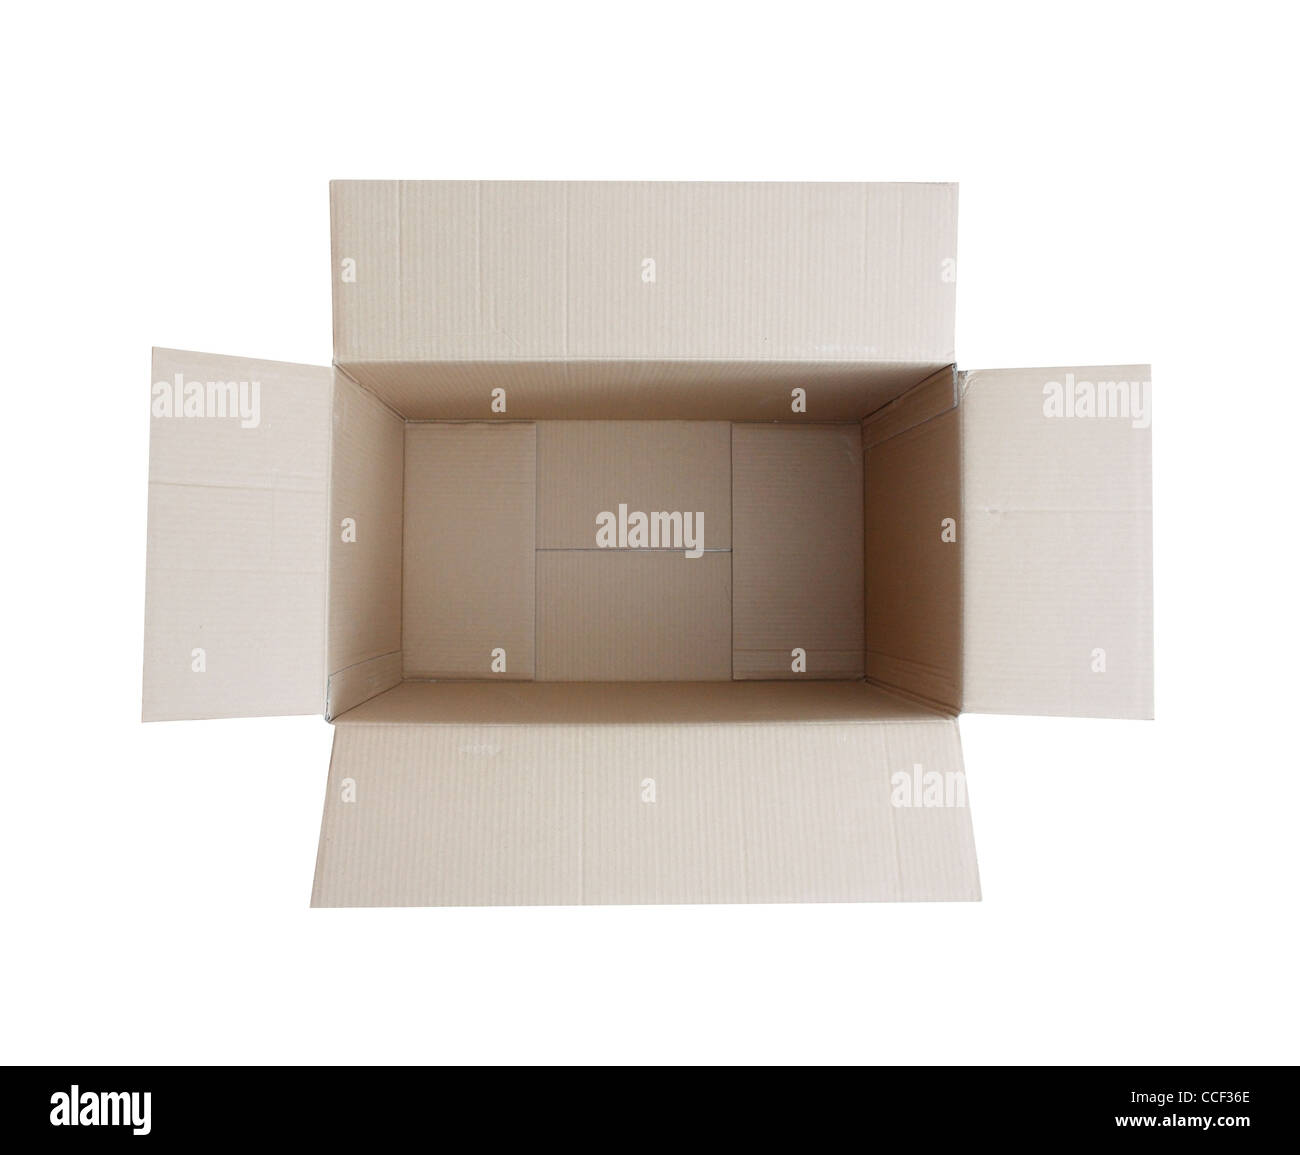 Cardboard box Stock Photo